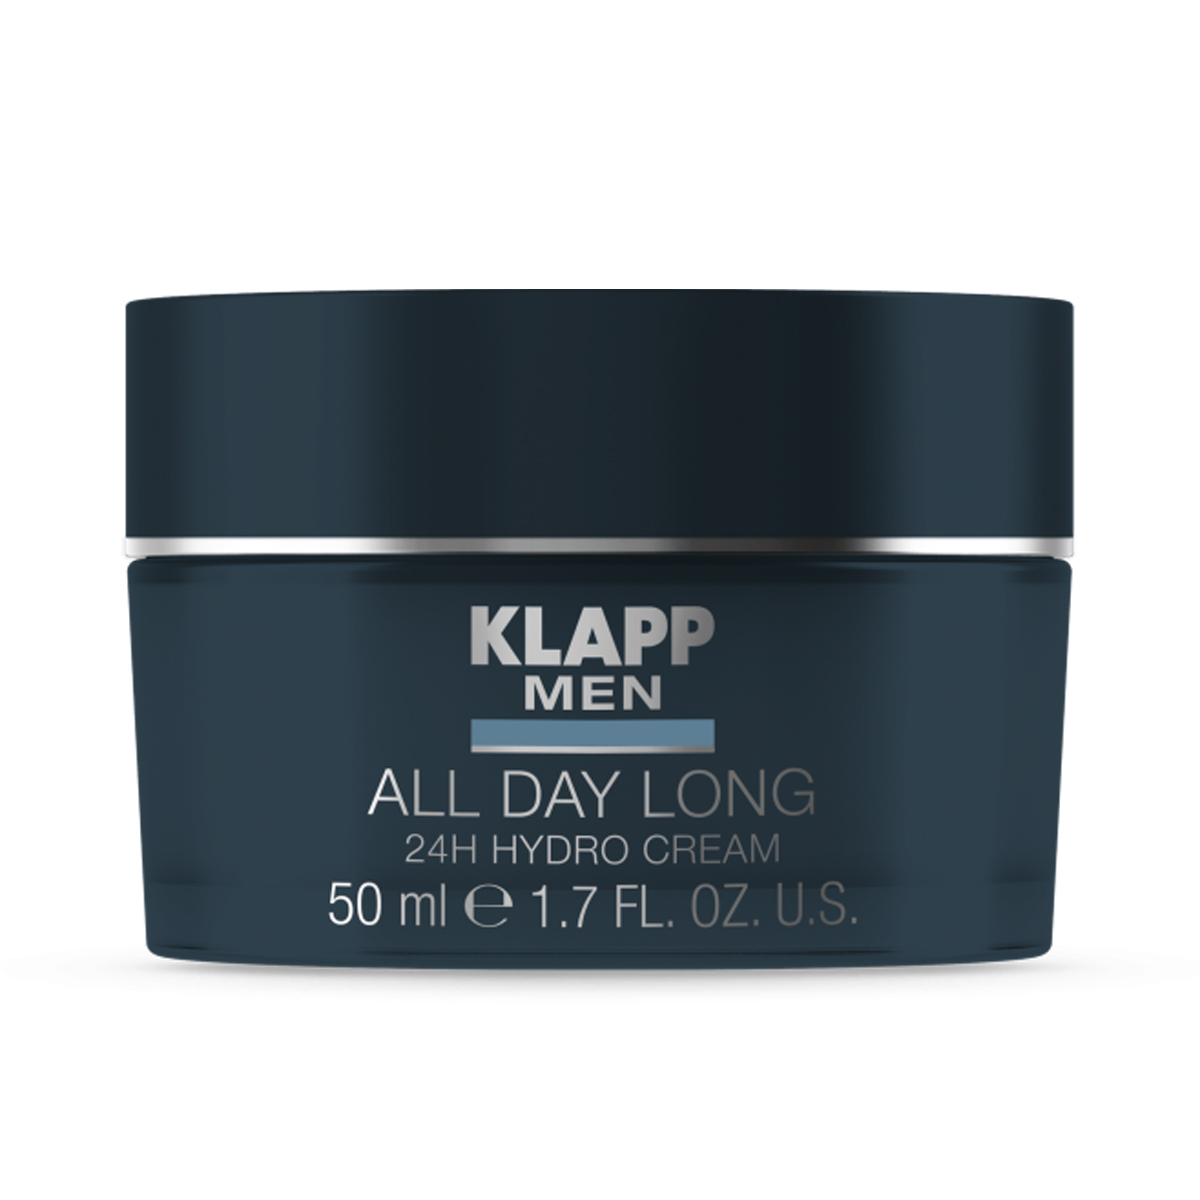 KLAPP Men All Day Long 24H Hydro Cream 50 ml